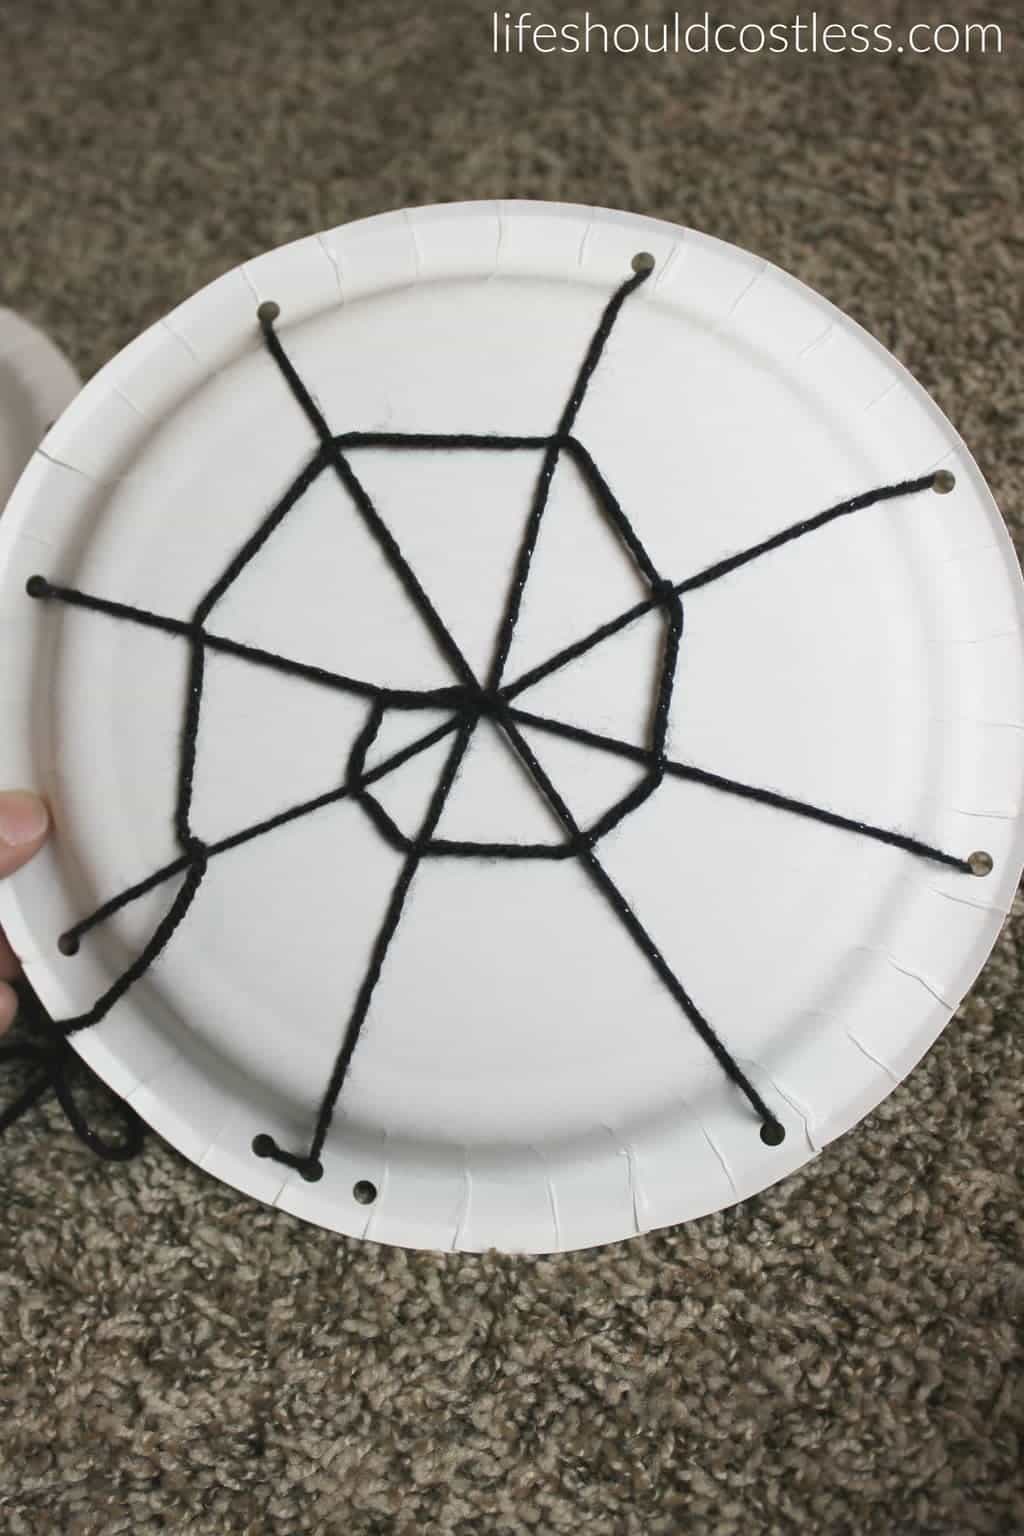 Halloween Spider Web Treat Plates. See this and many more popular seasonal pins at lifeshouldcostless.com. 